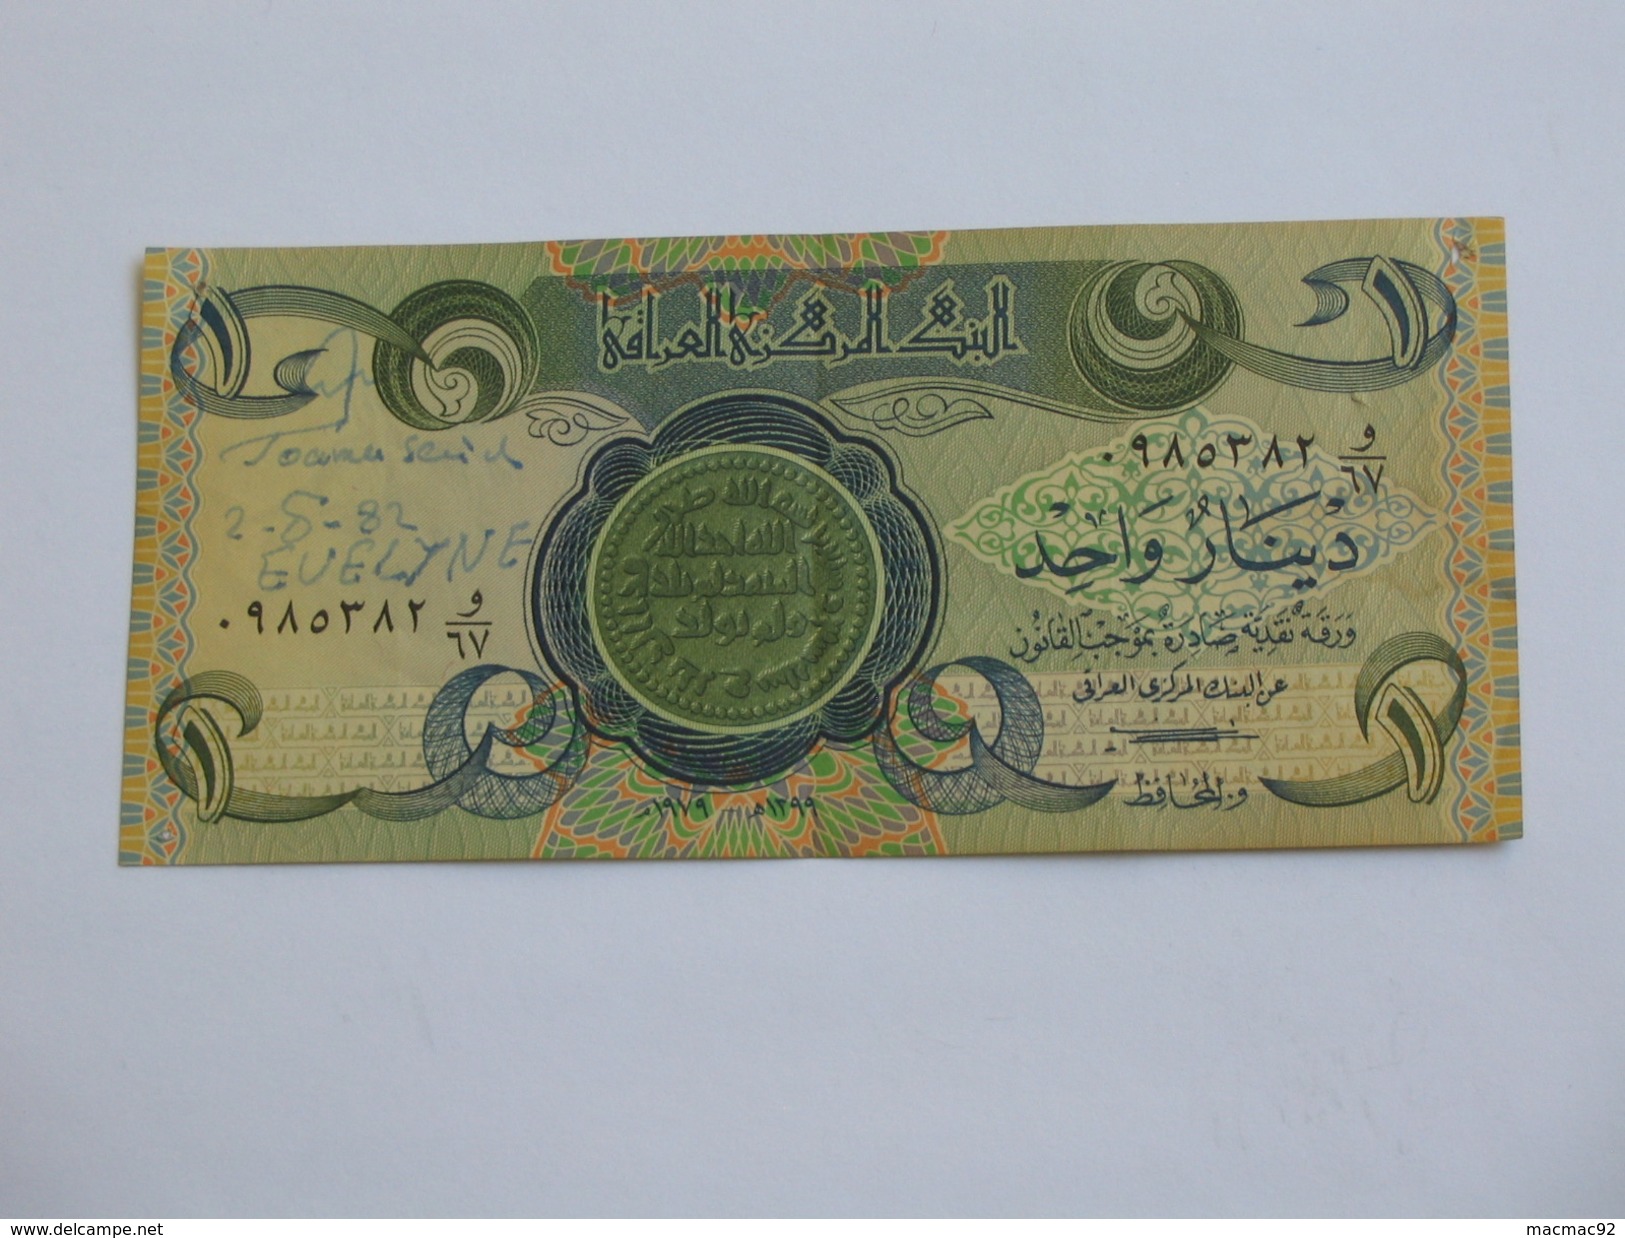 1 One Dinar 1979 - Central Bank Of IRAQ    **** EN  ACHAT IMMEDIAT  **** - Iraq